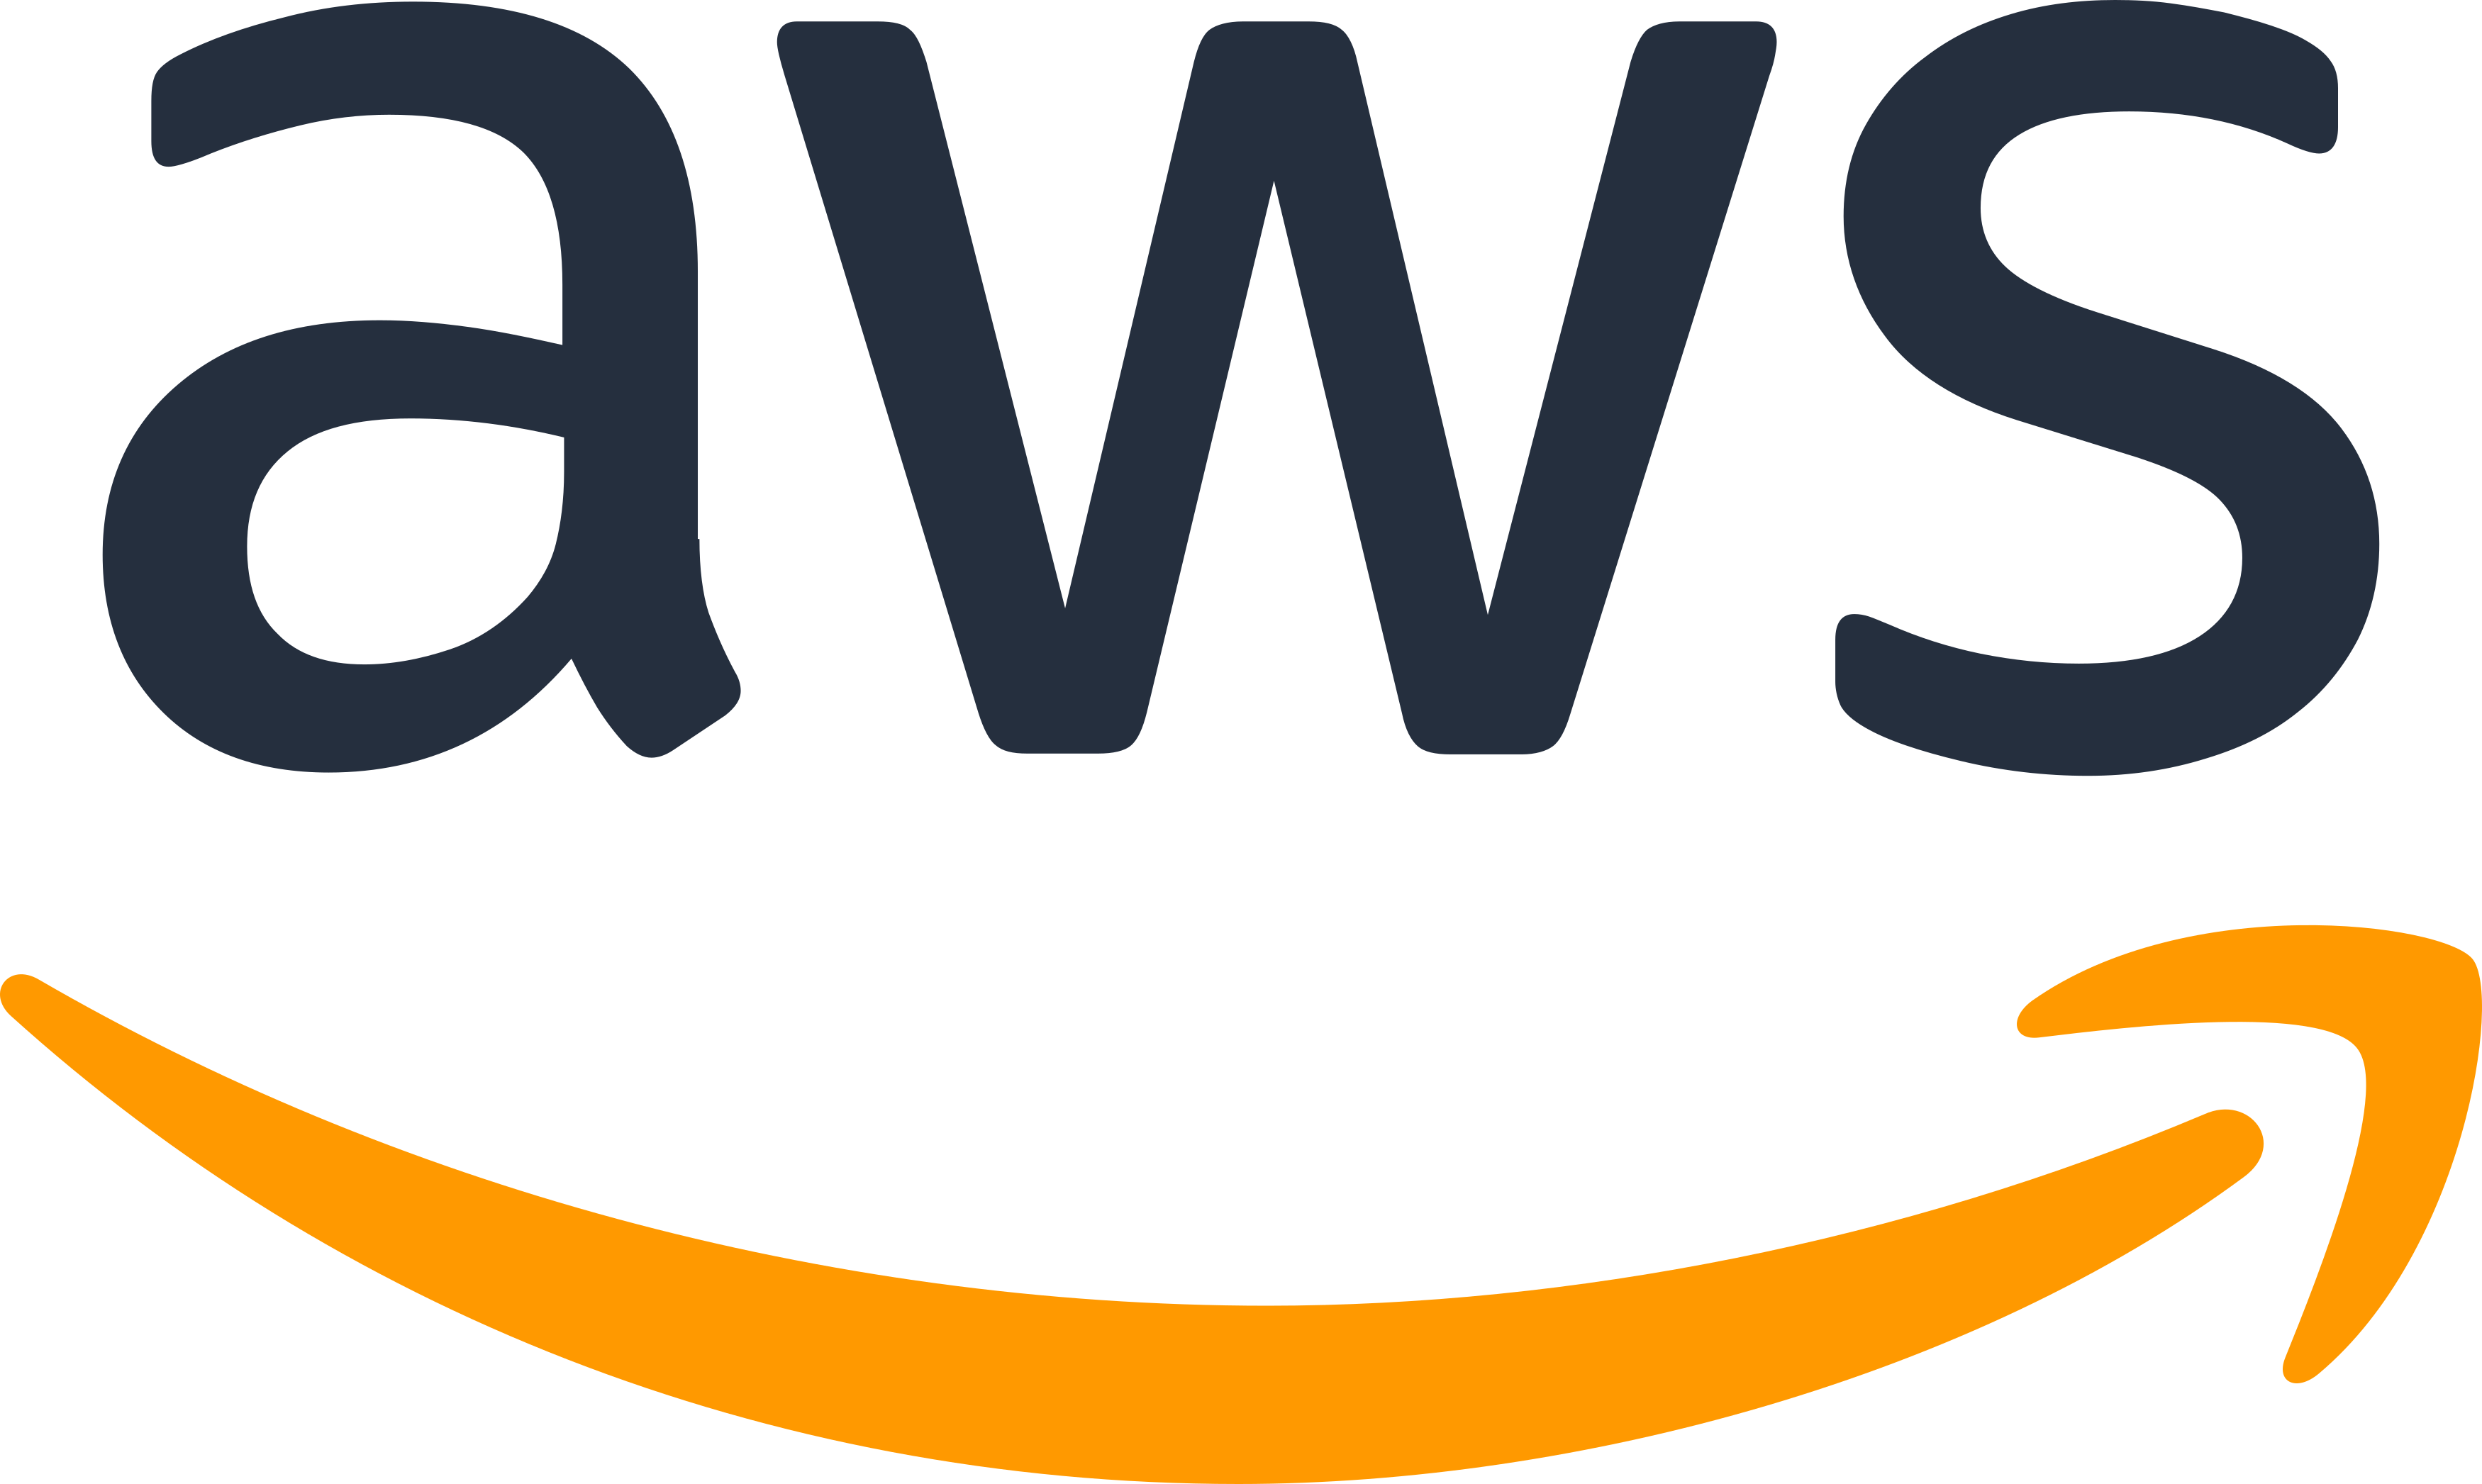 amazon-web-services-logo